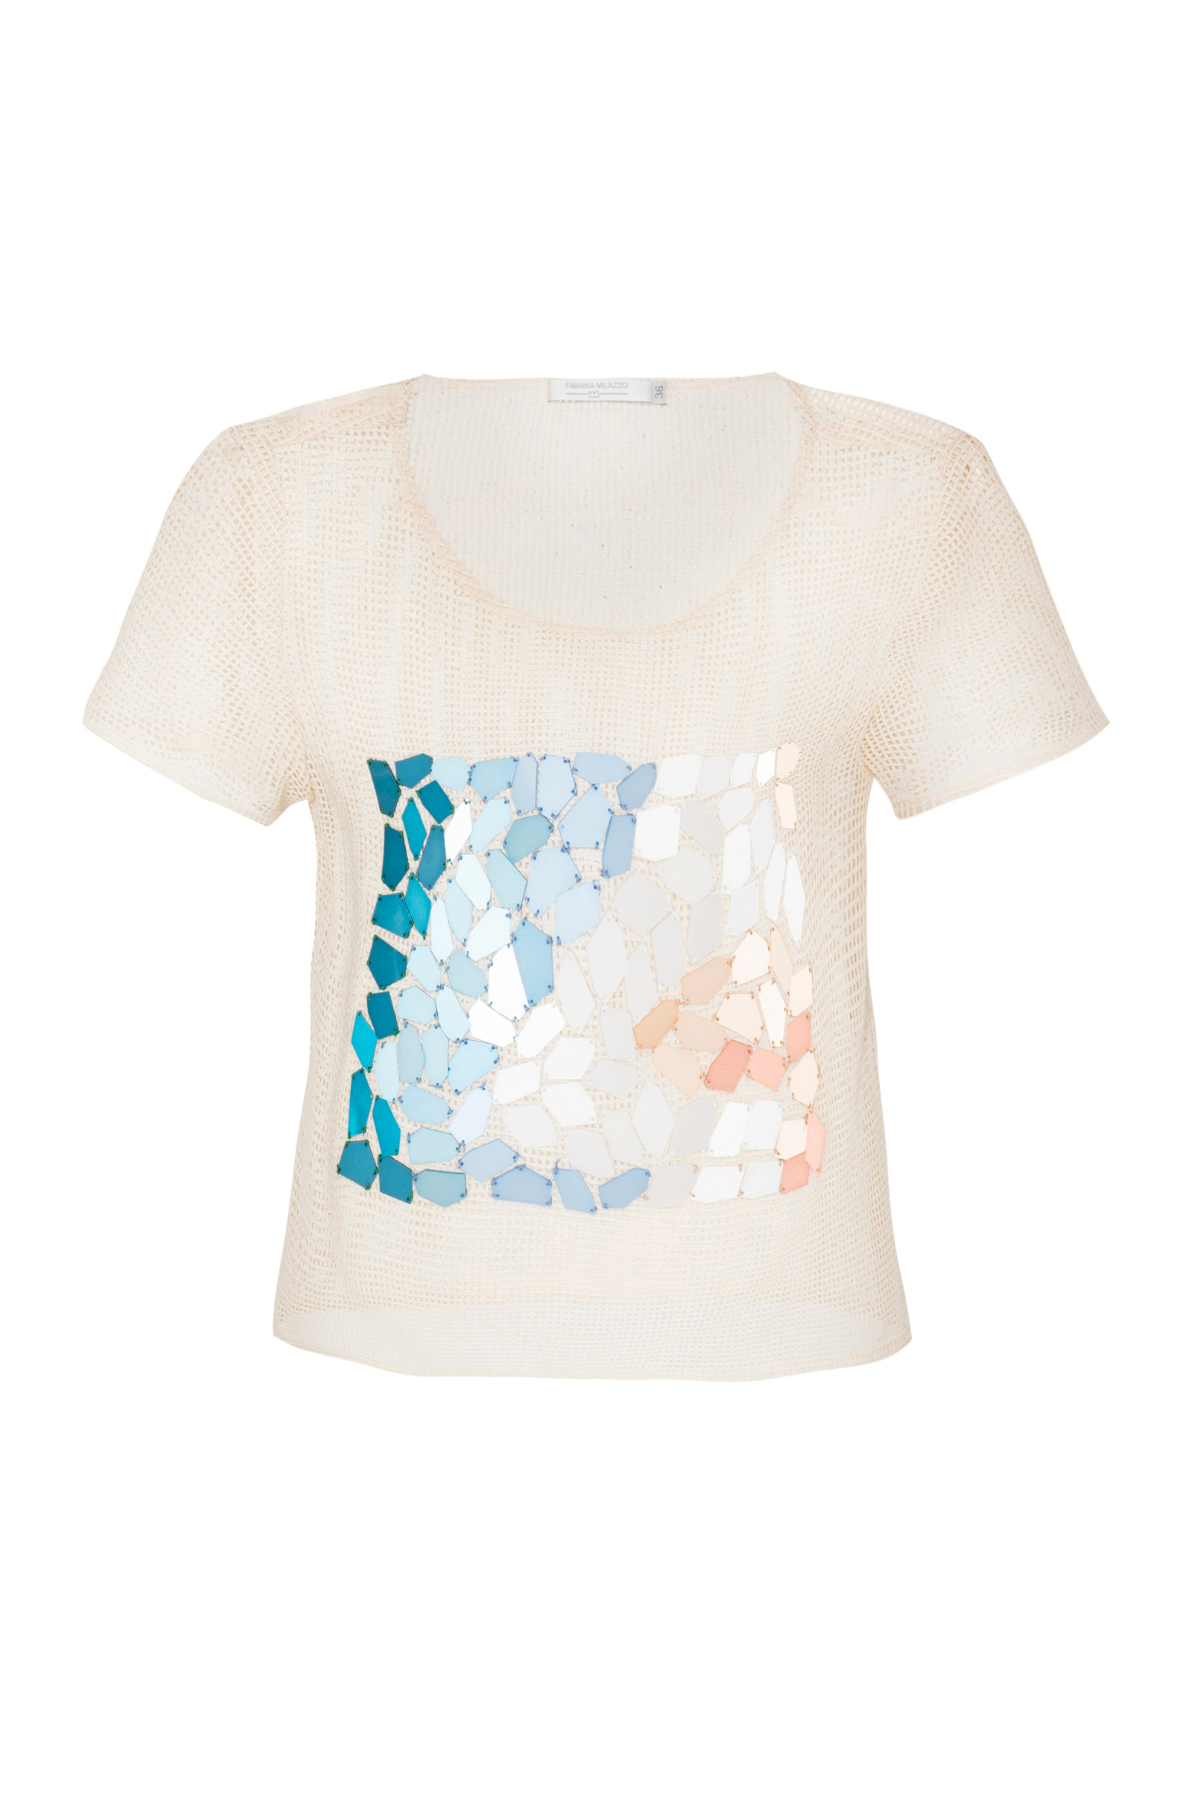 T-Shirt Tela Bordada Mosaico Wave